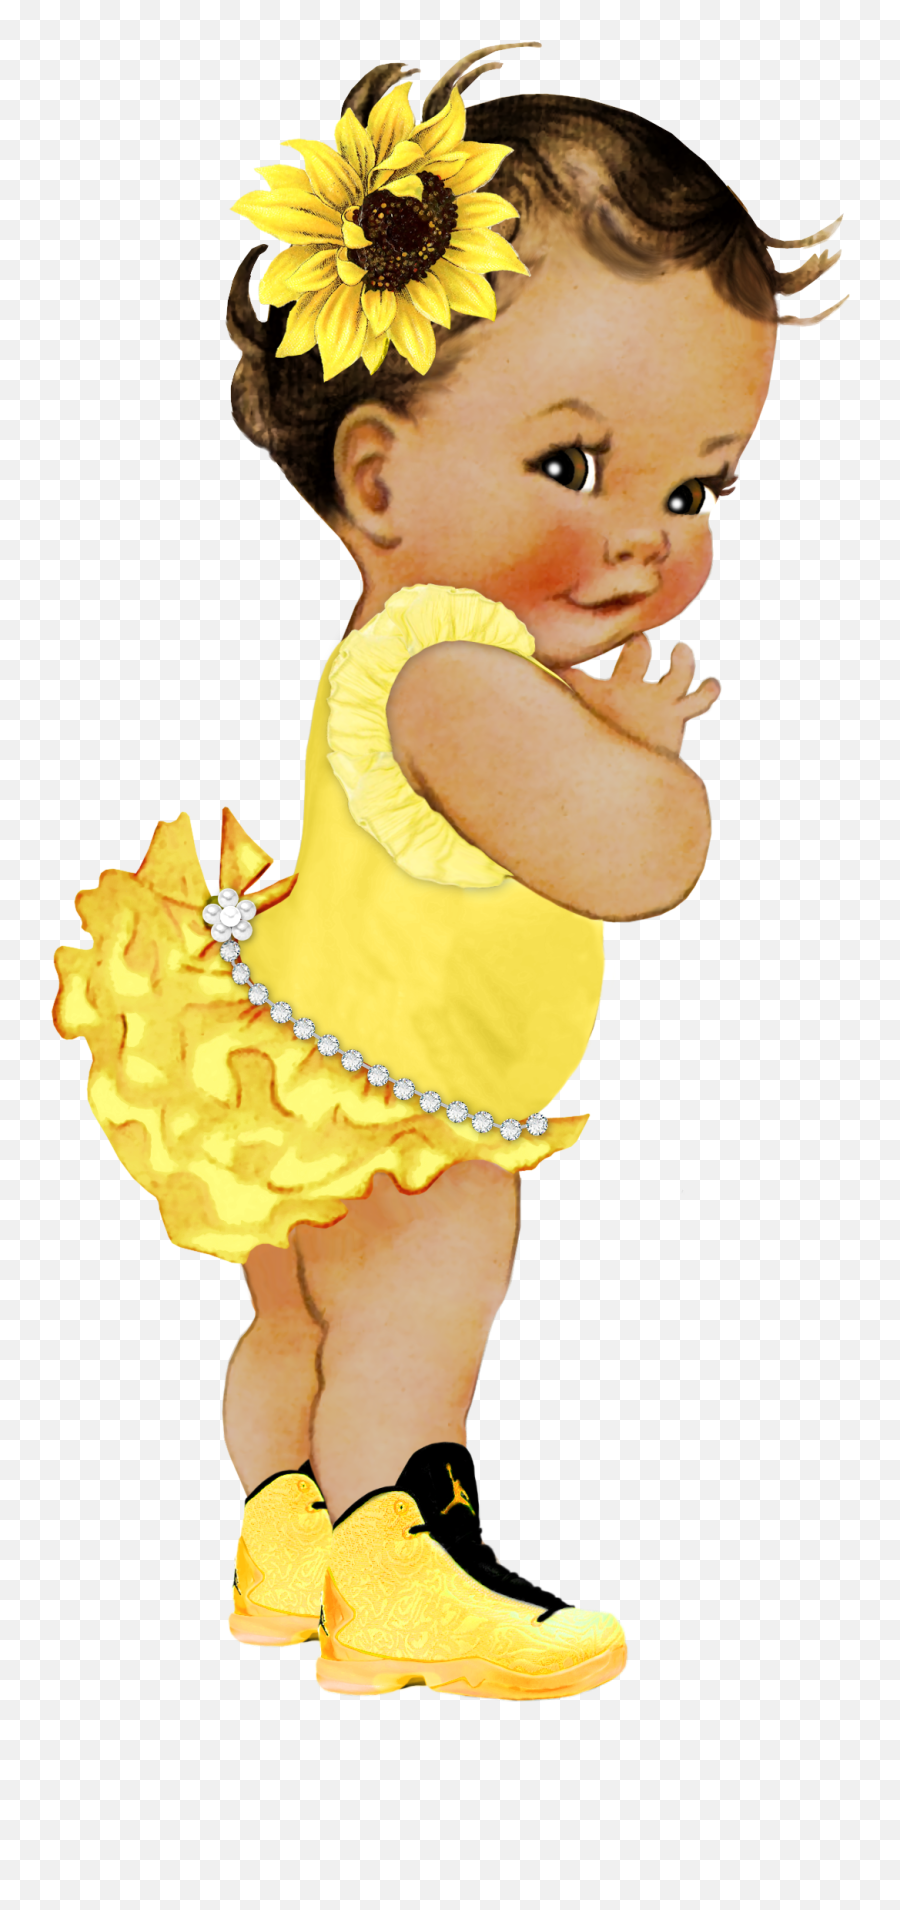 Corjl - Yellow Afro Puff Baby Emoji,Pictionary With Emojis\